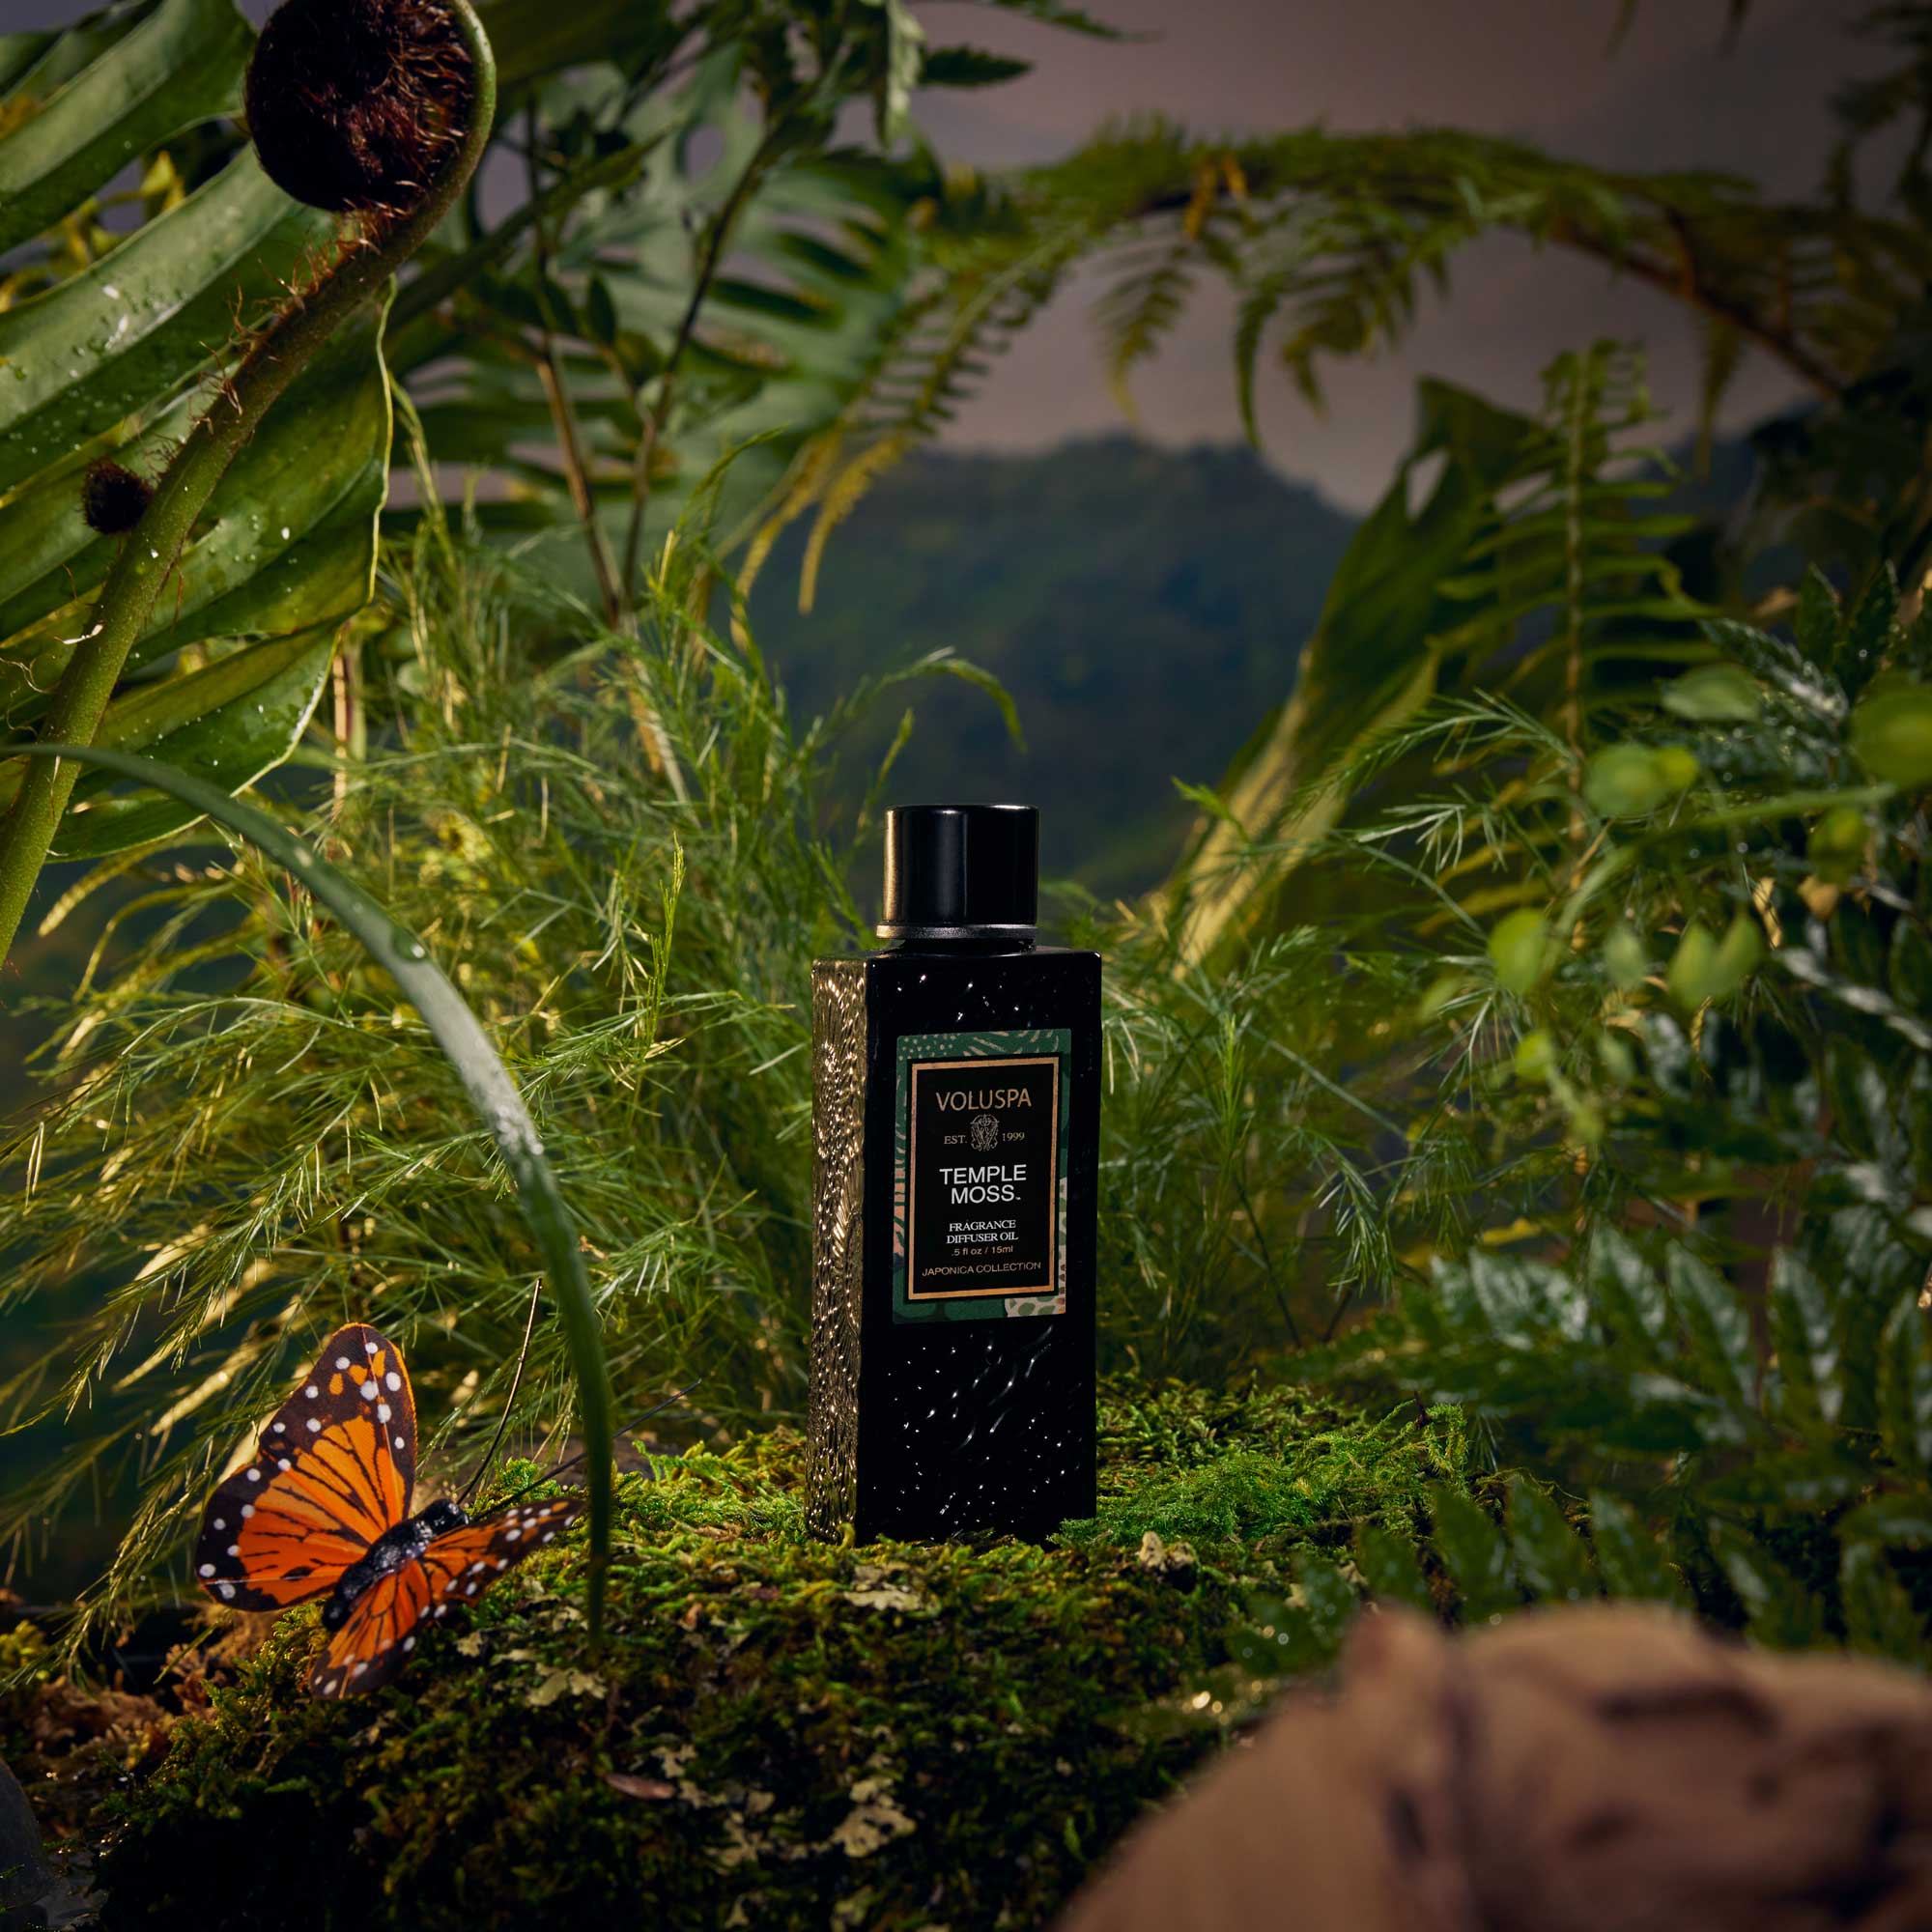 Temple Moss - Ultrasonic Diffuser Fragrance Oil